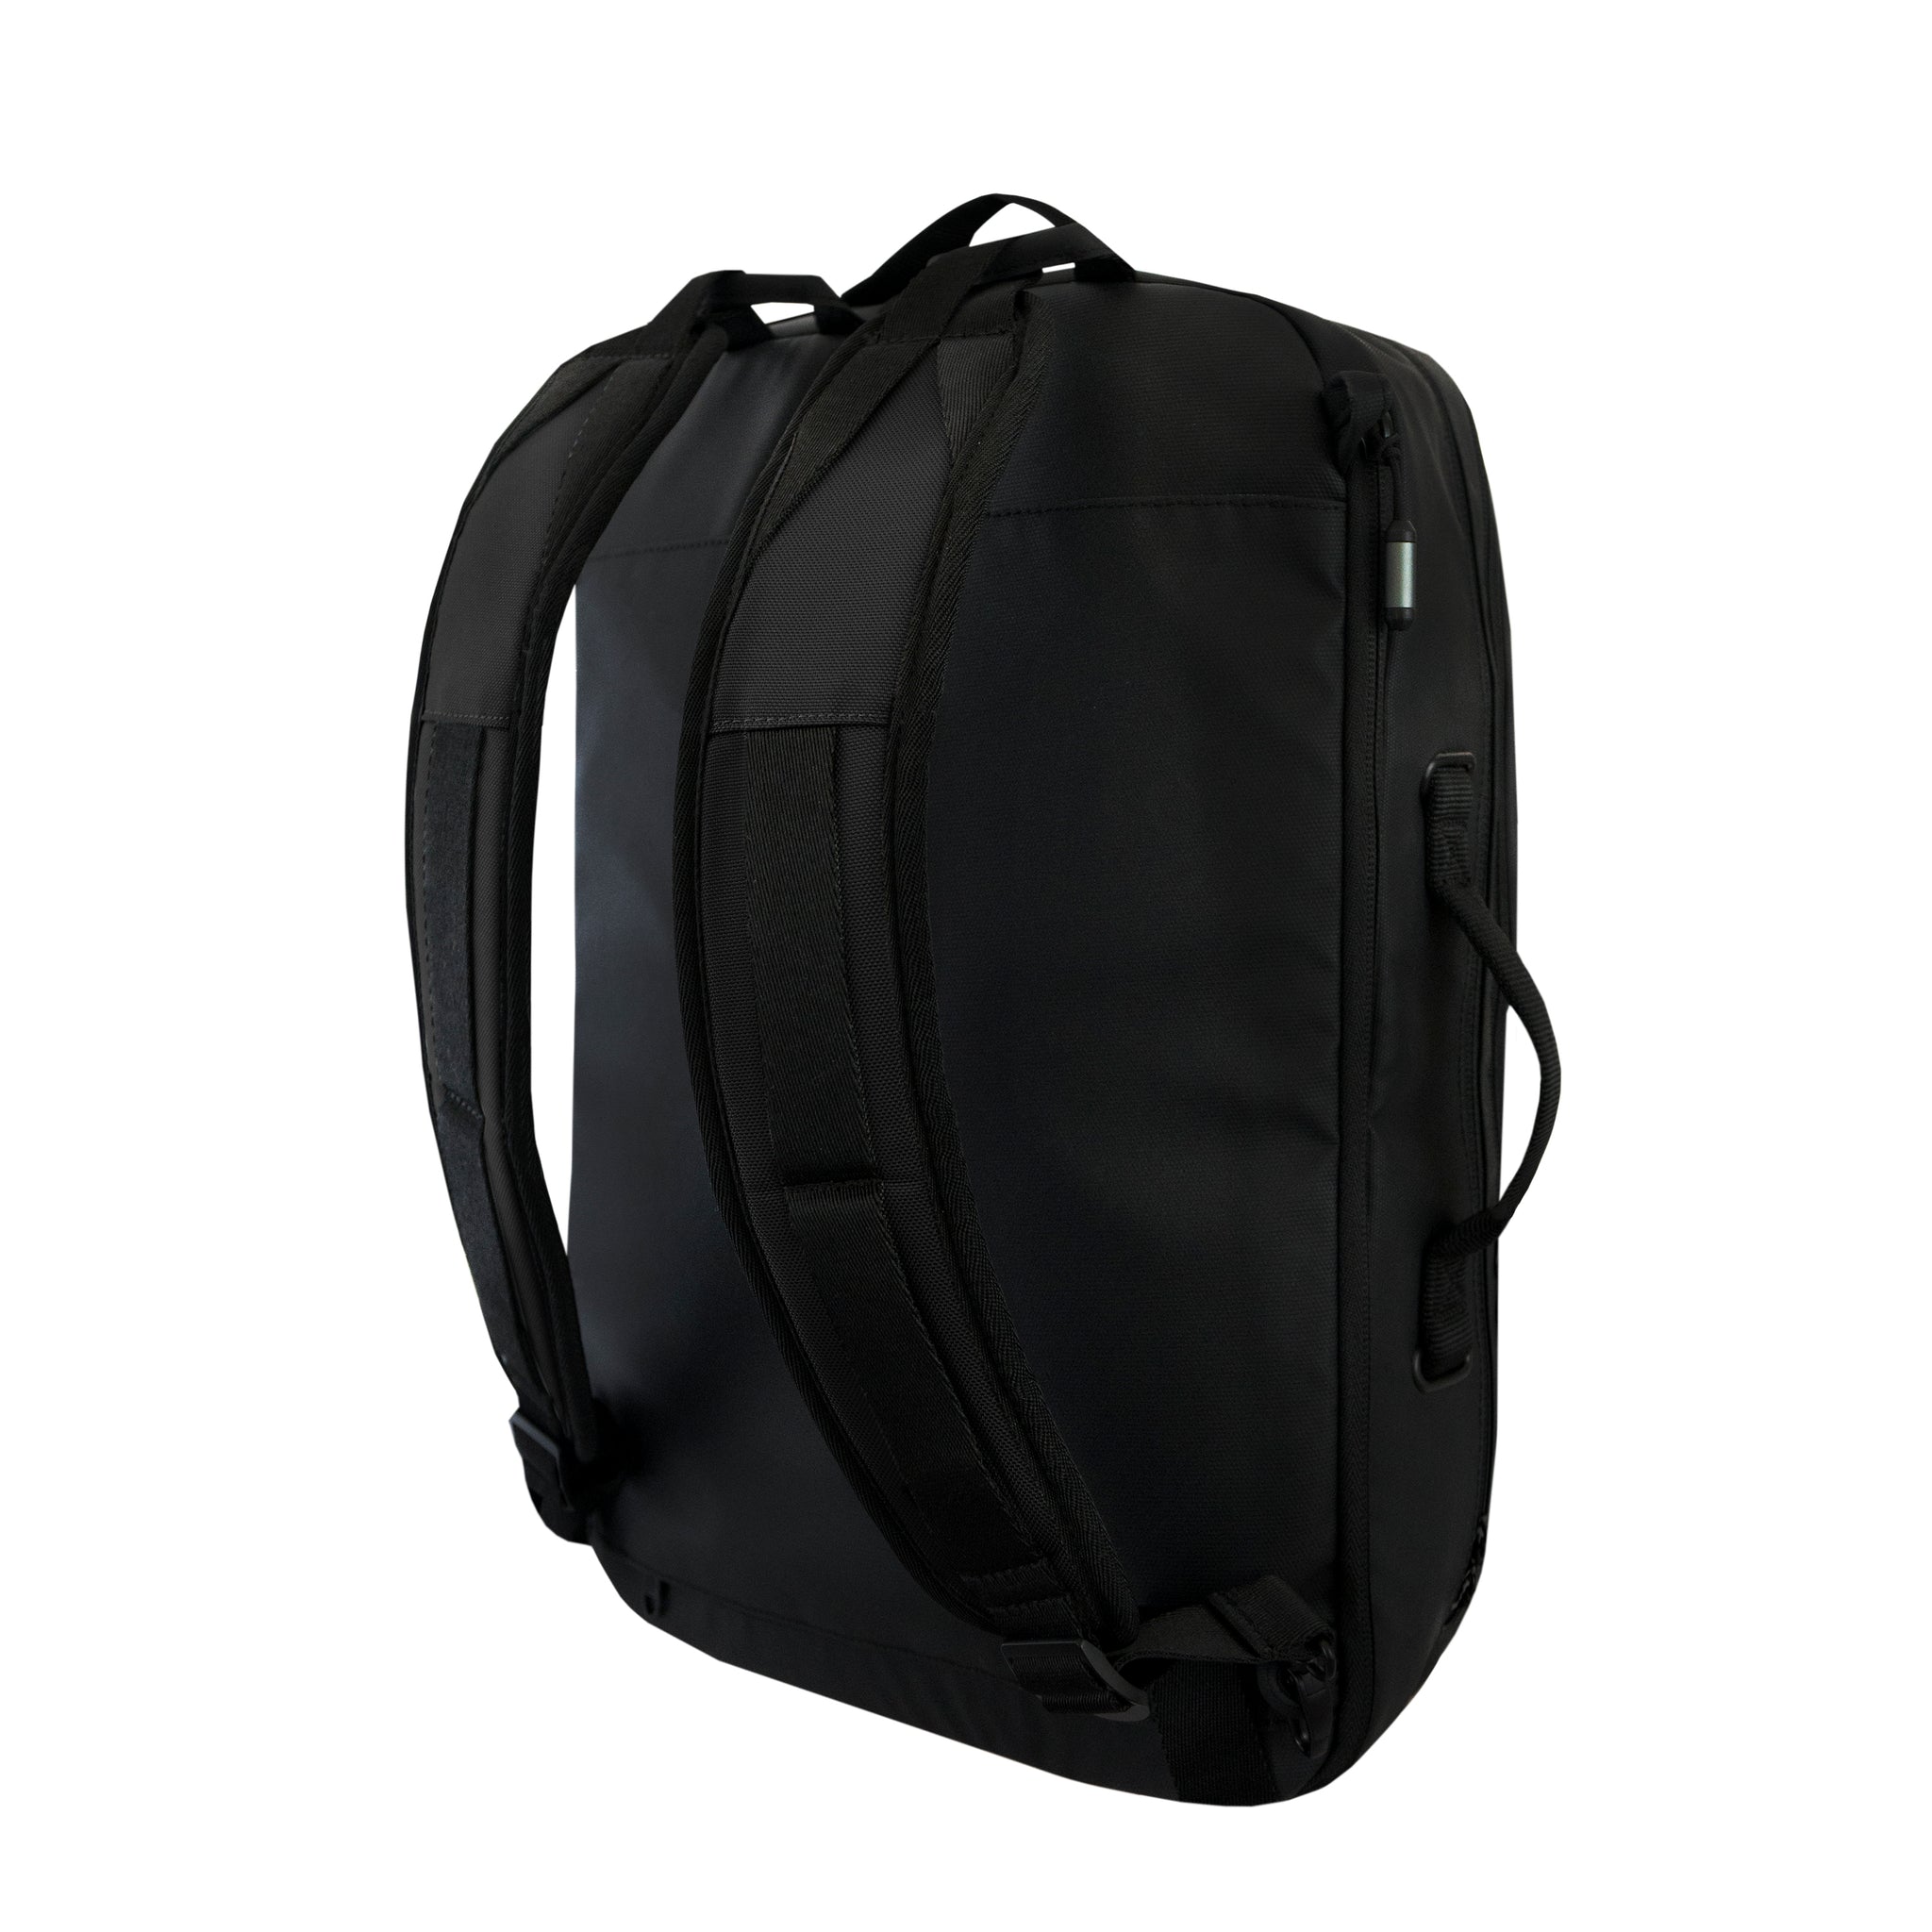 LEXON - Airline bags collection by Luca Artioli e Marco Pulga , via Behance  | Bags, Bags designer, Office bag